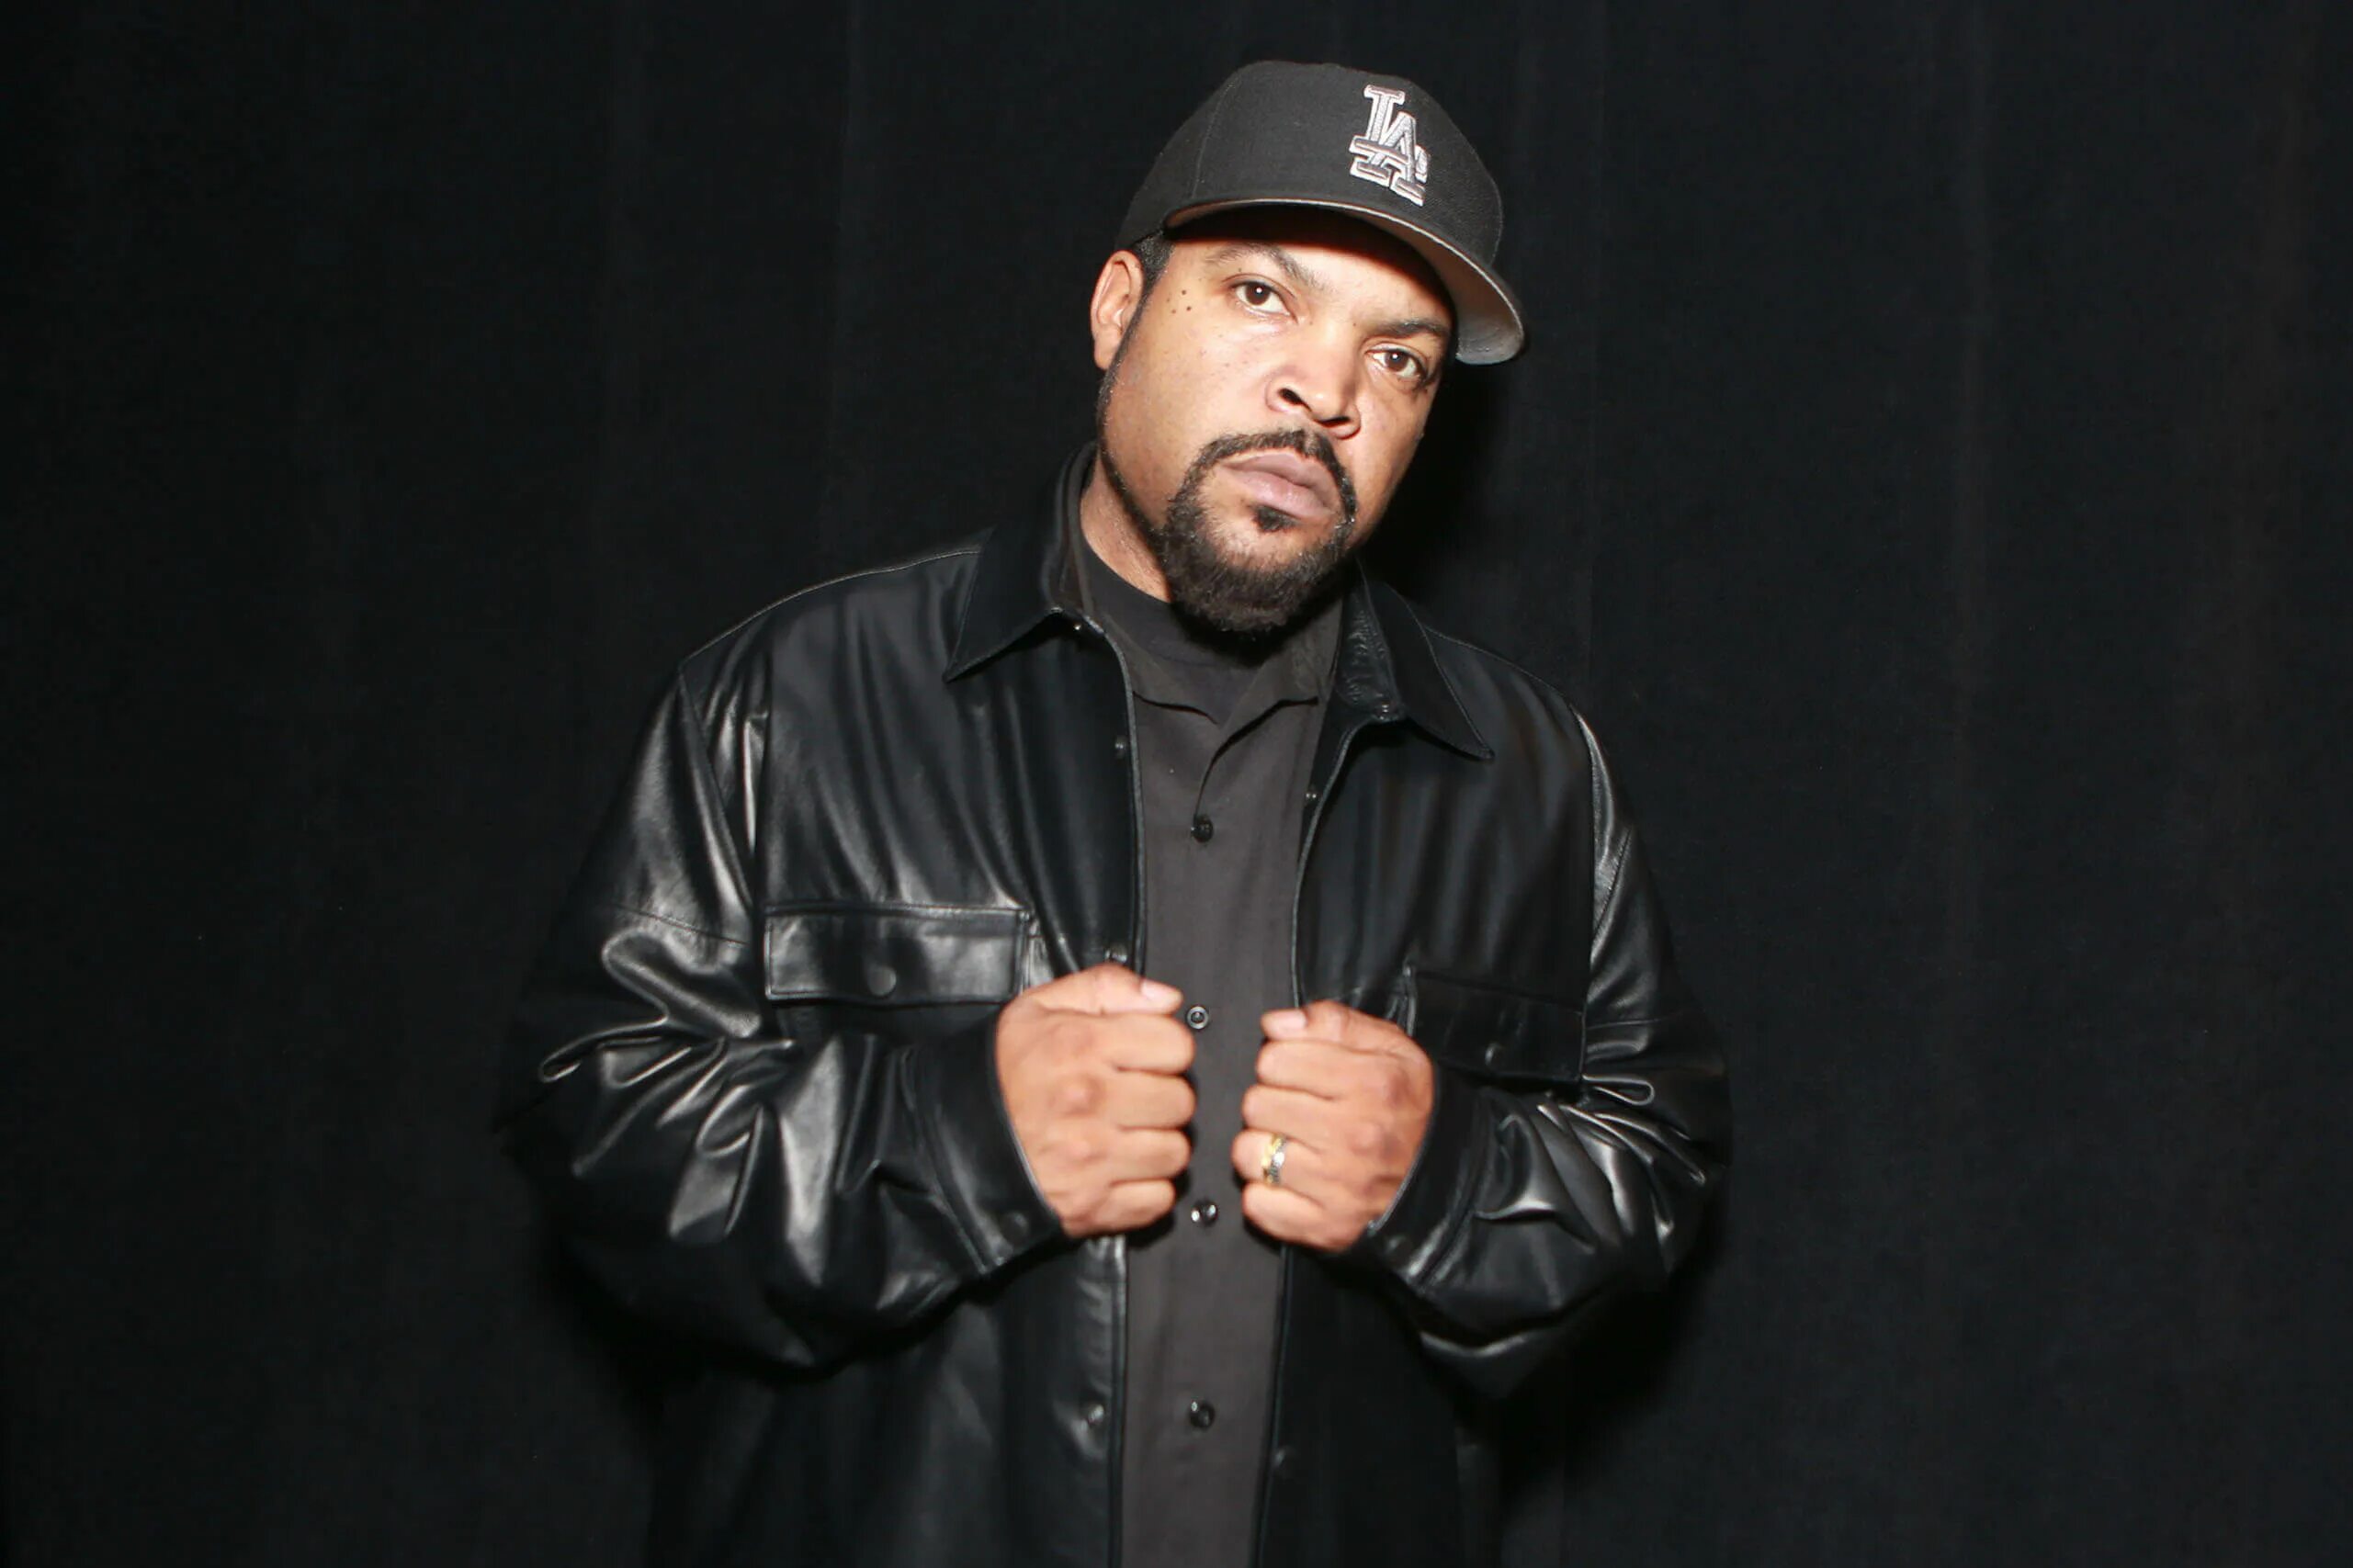 Айс Кьюб (Ice Cube). Айс Кьюб 2022. Ice Cube 19. Ice Cube 2000. Ice cube down down